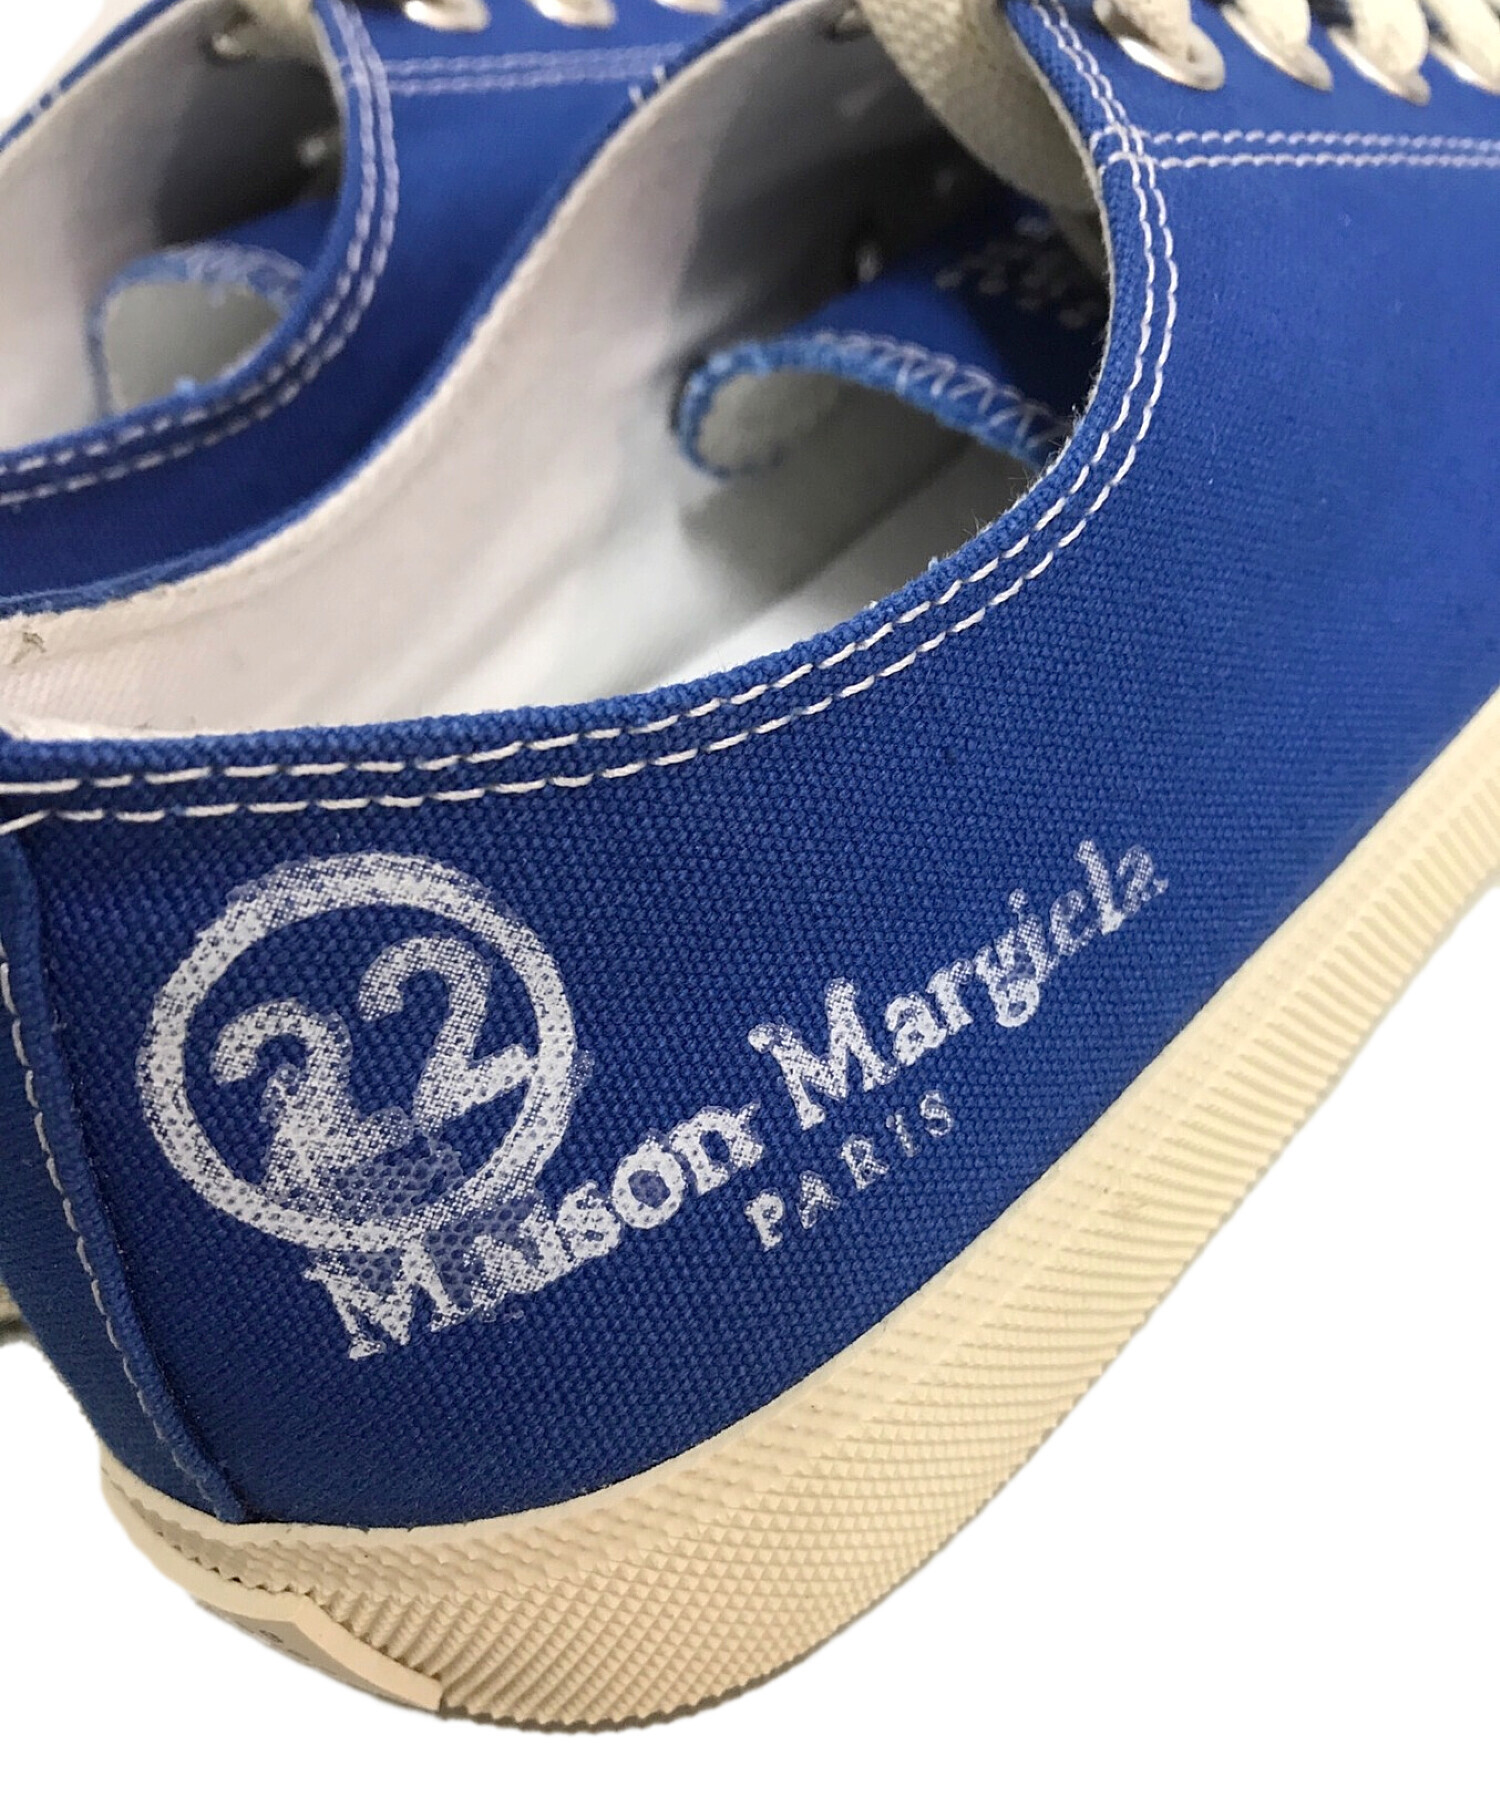 Maison Margiela 22 (メゾン マルジェラ 22) キャンバス足袋スニーカー ブルー サイズ:41